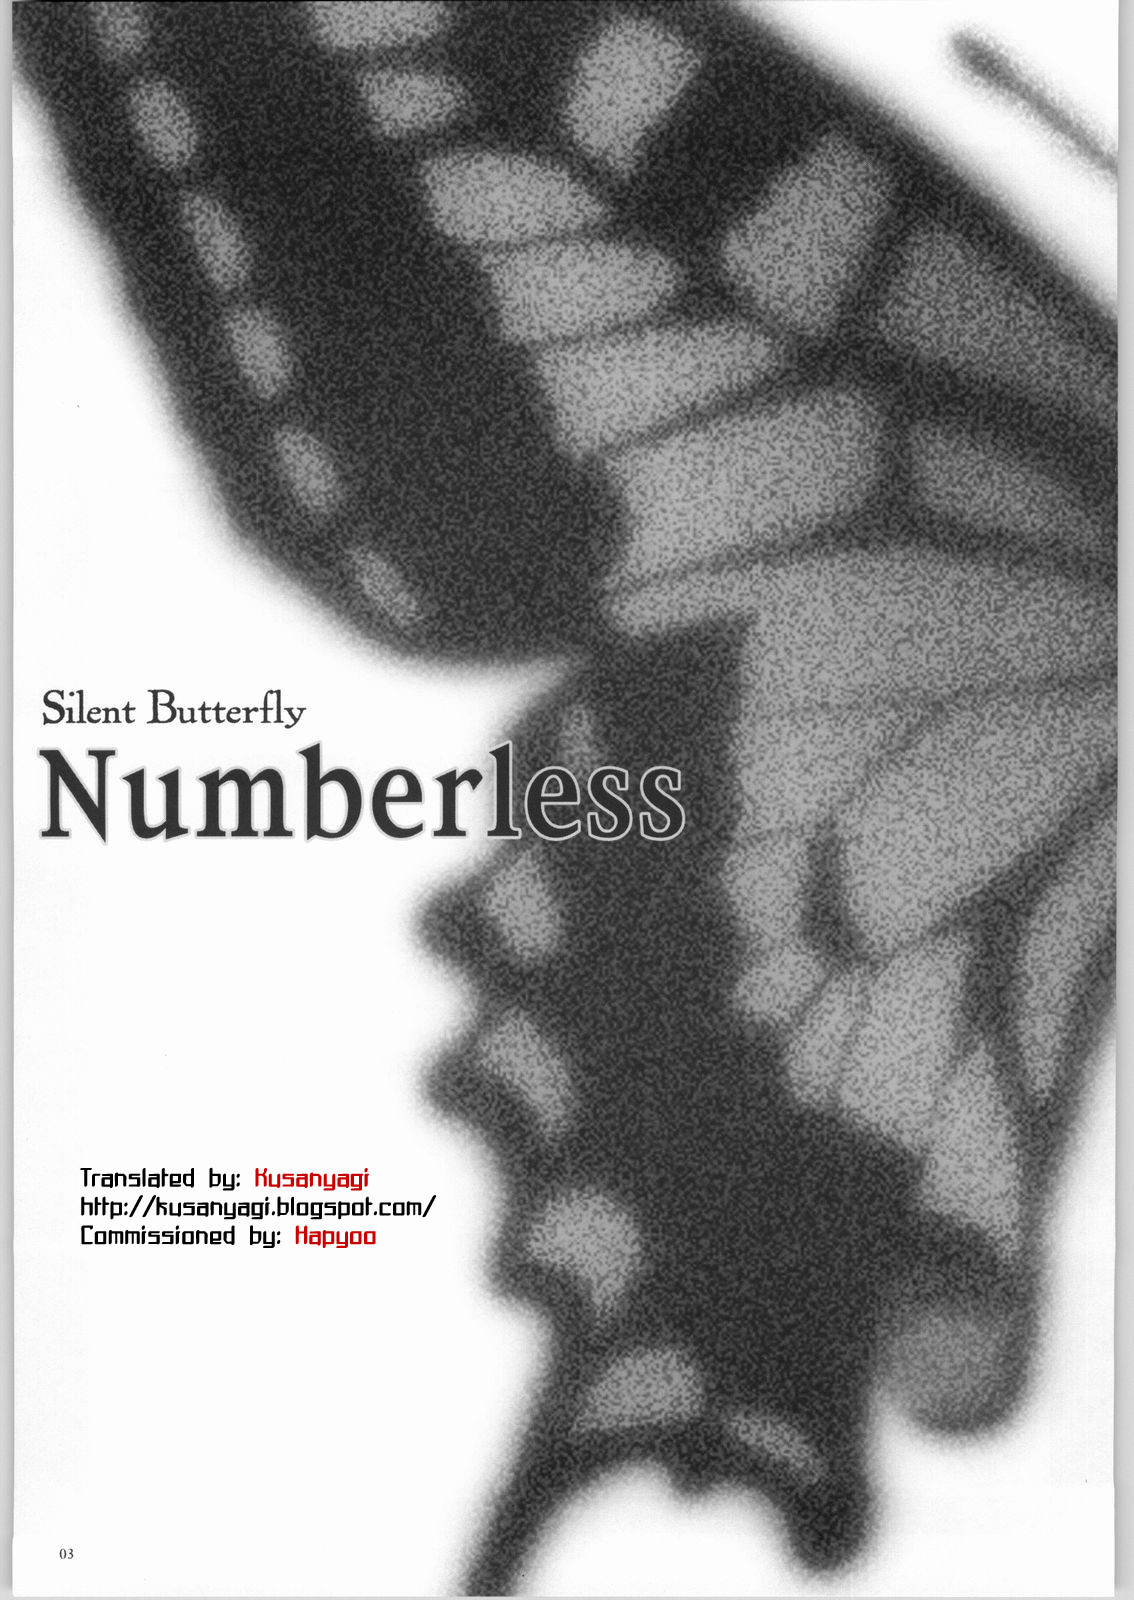 (C65) [Studio Neo Black (Neo Black)] Silent Butterfly Numberless [英訳]